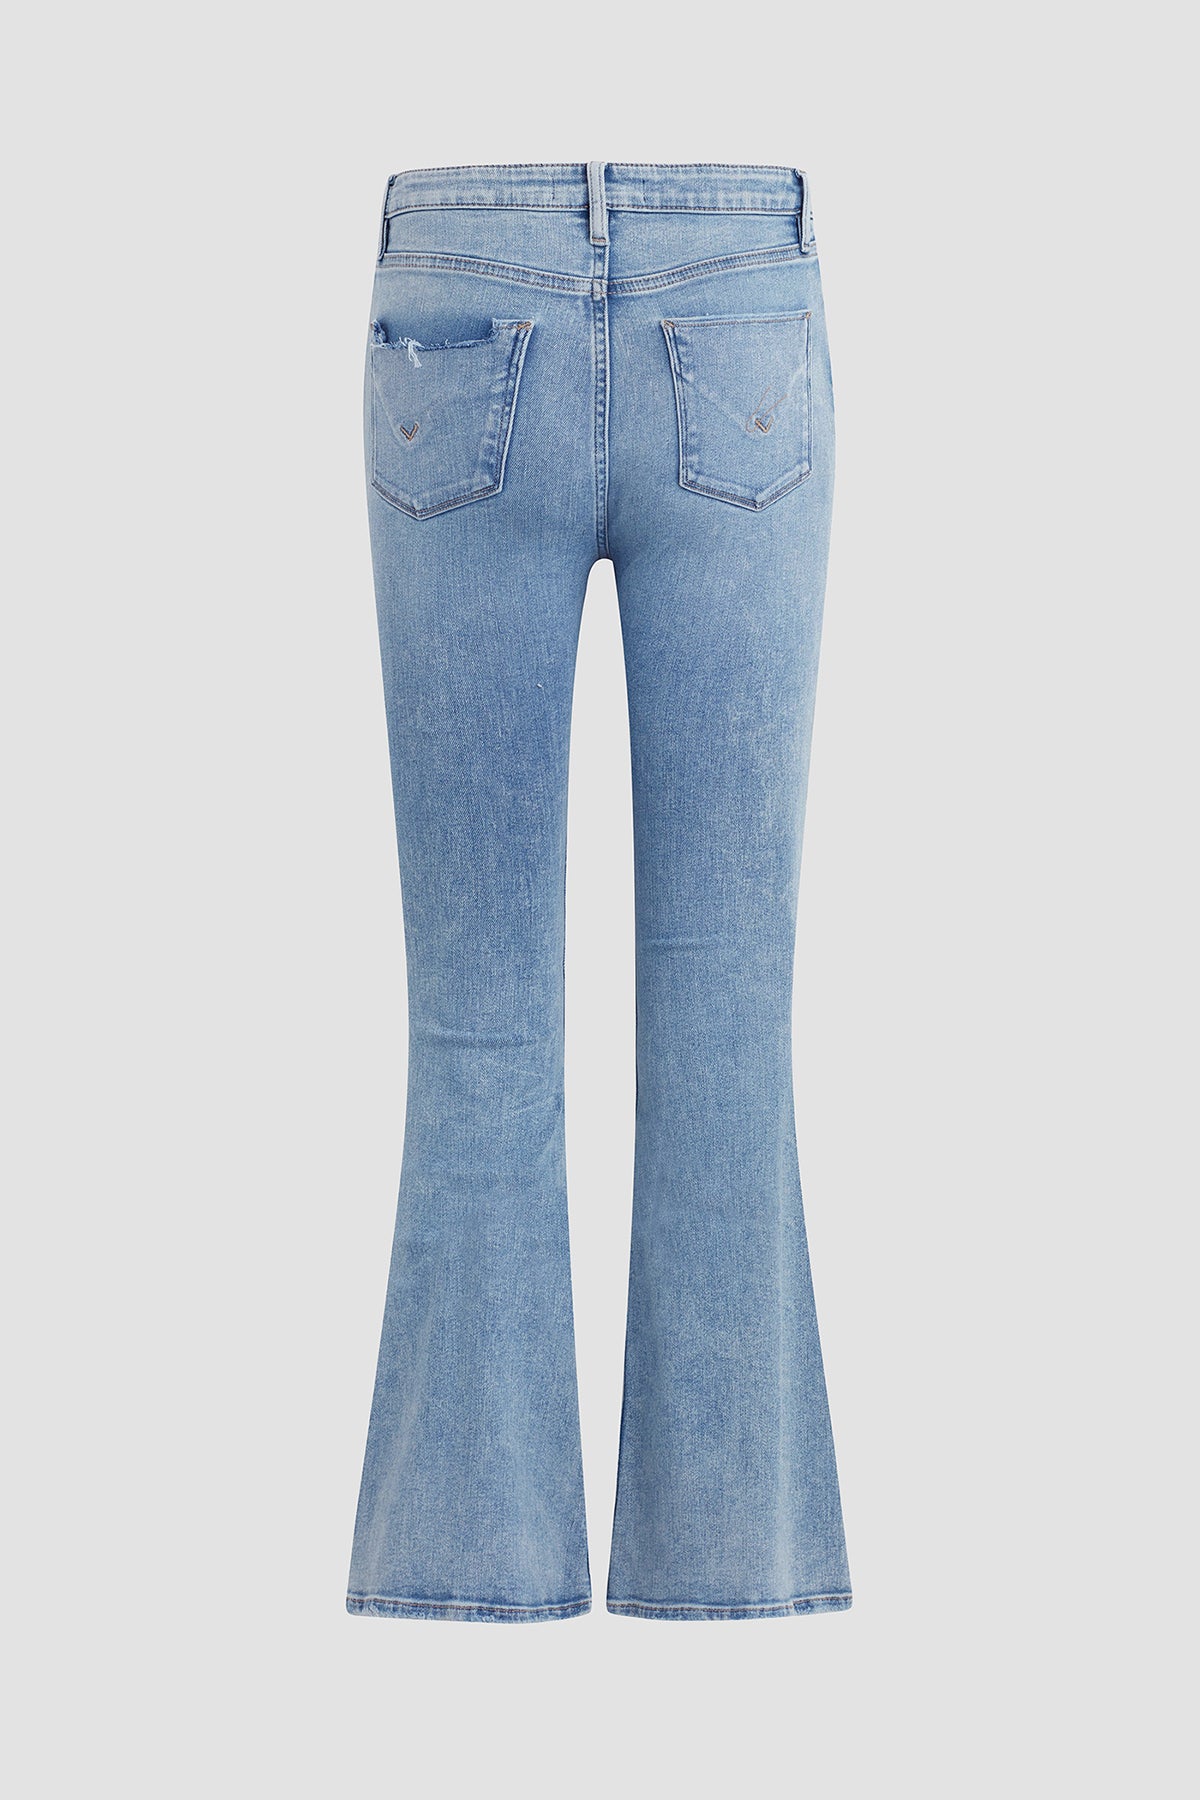 Holly High-Rise Flare Jean, Premium Italian Fabric